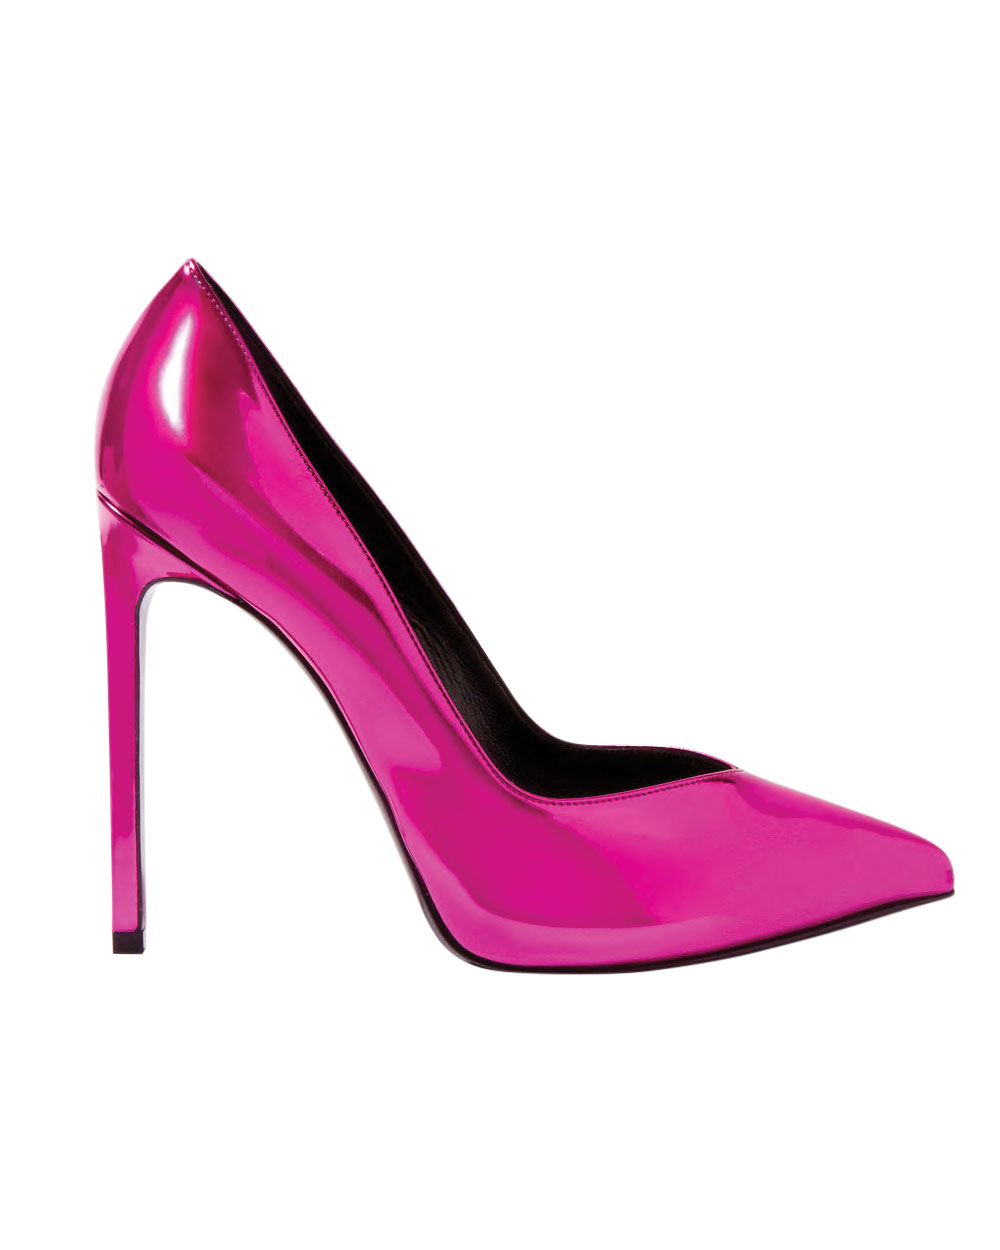 Saint Laurent heels, $779, from Net-a-Porter